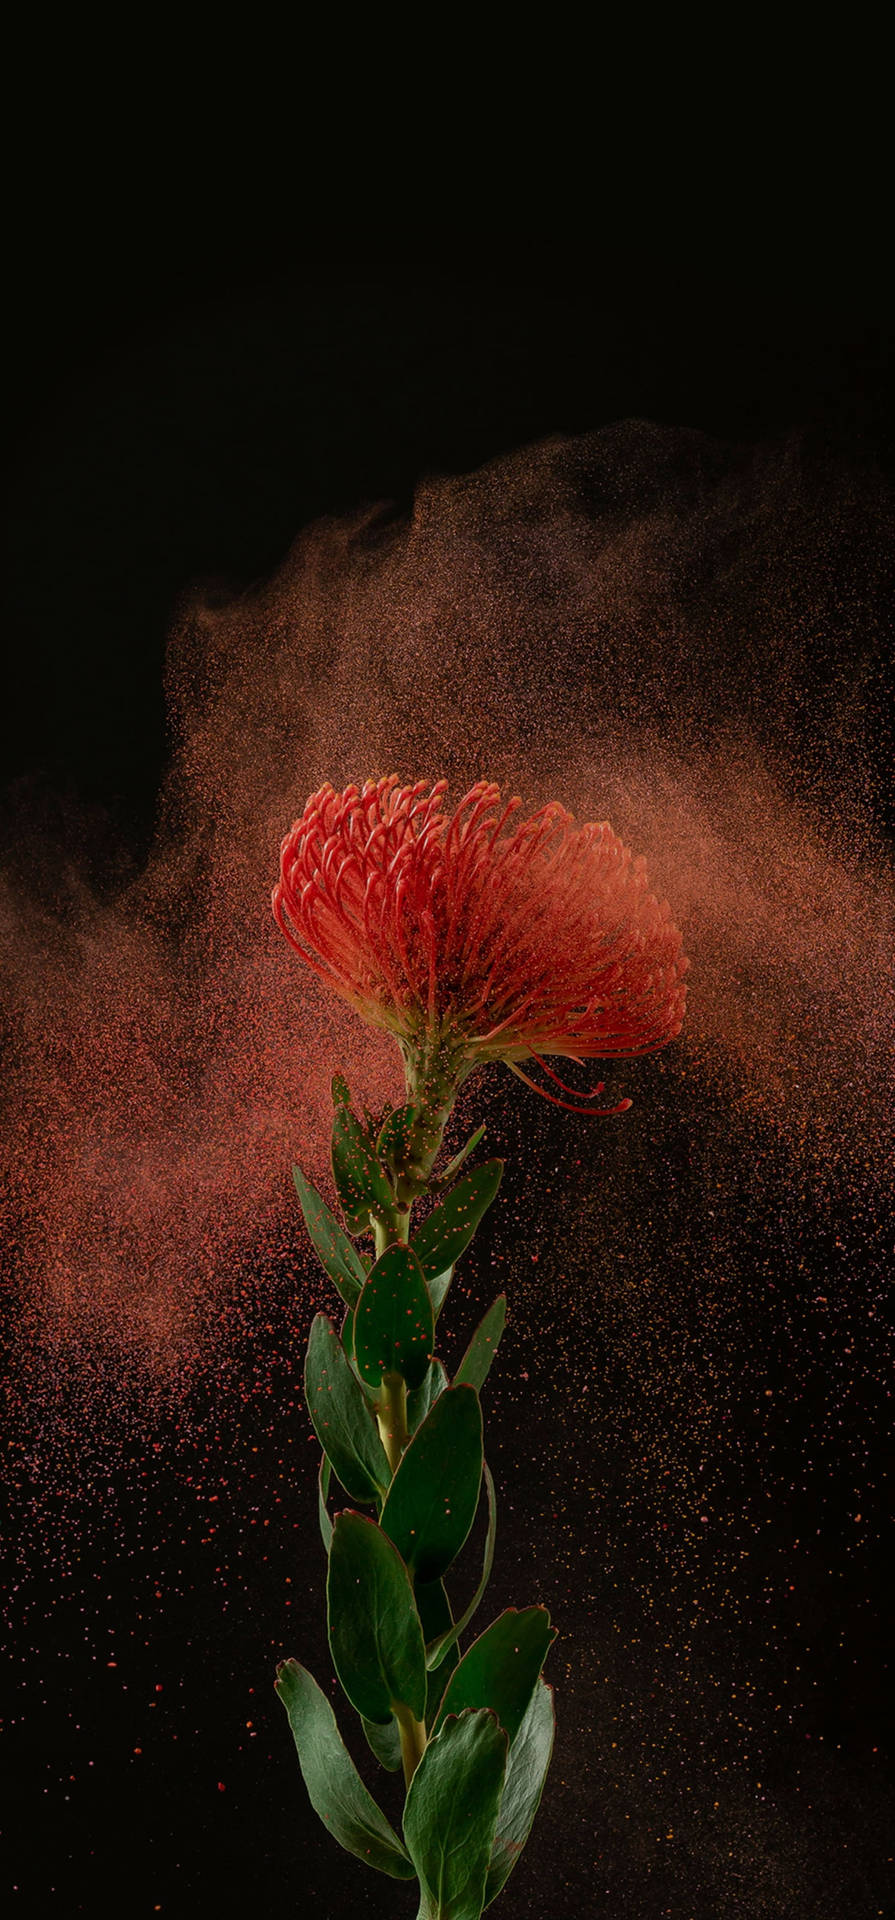 Powdered Pincushion Flower On Samsung Full Hd